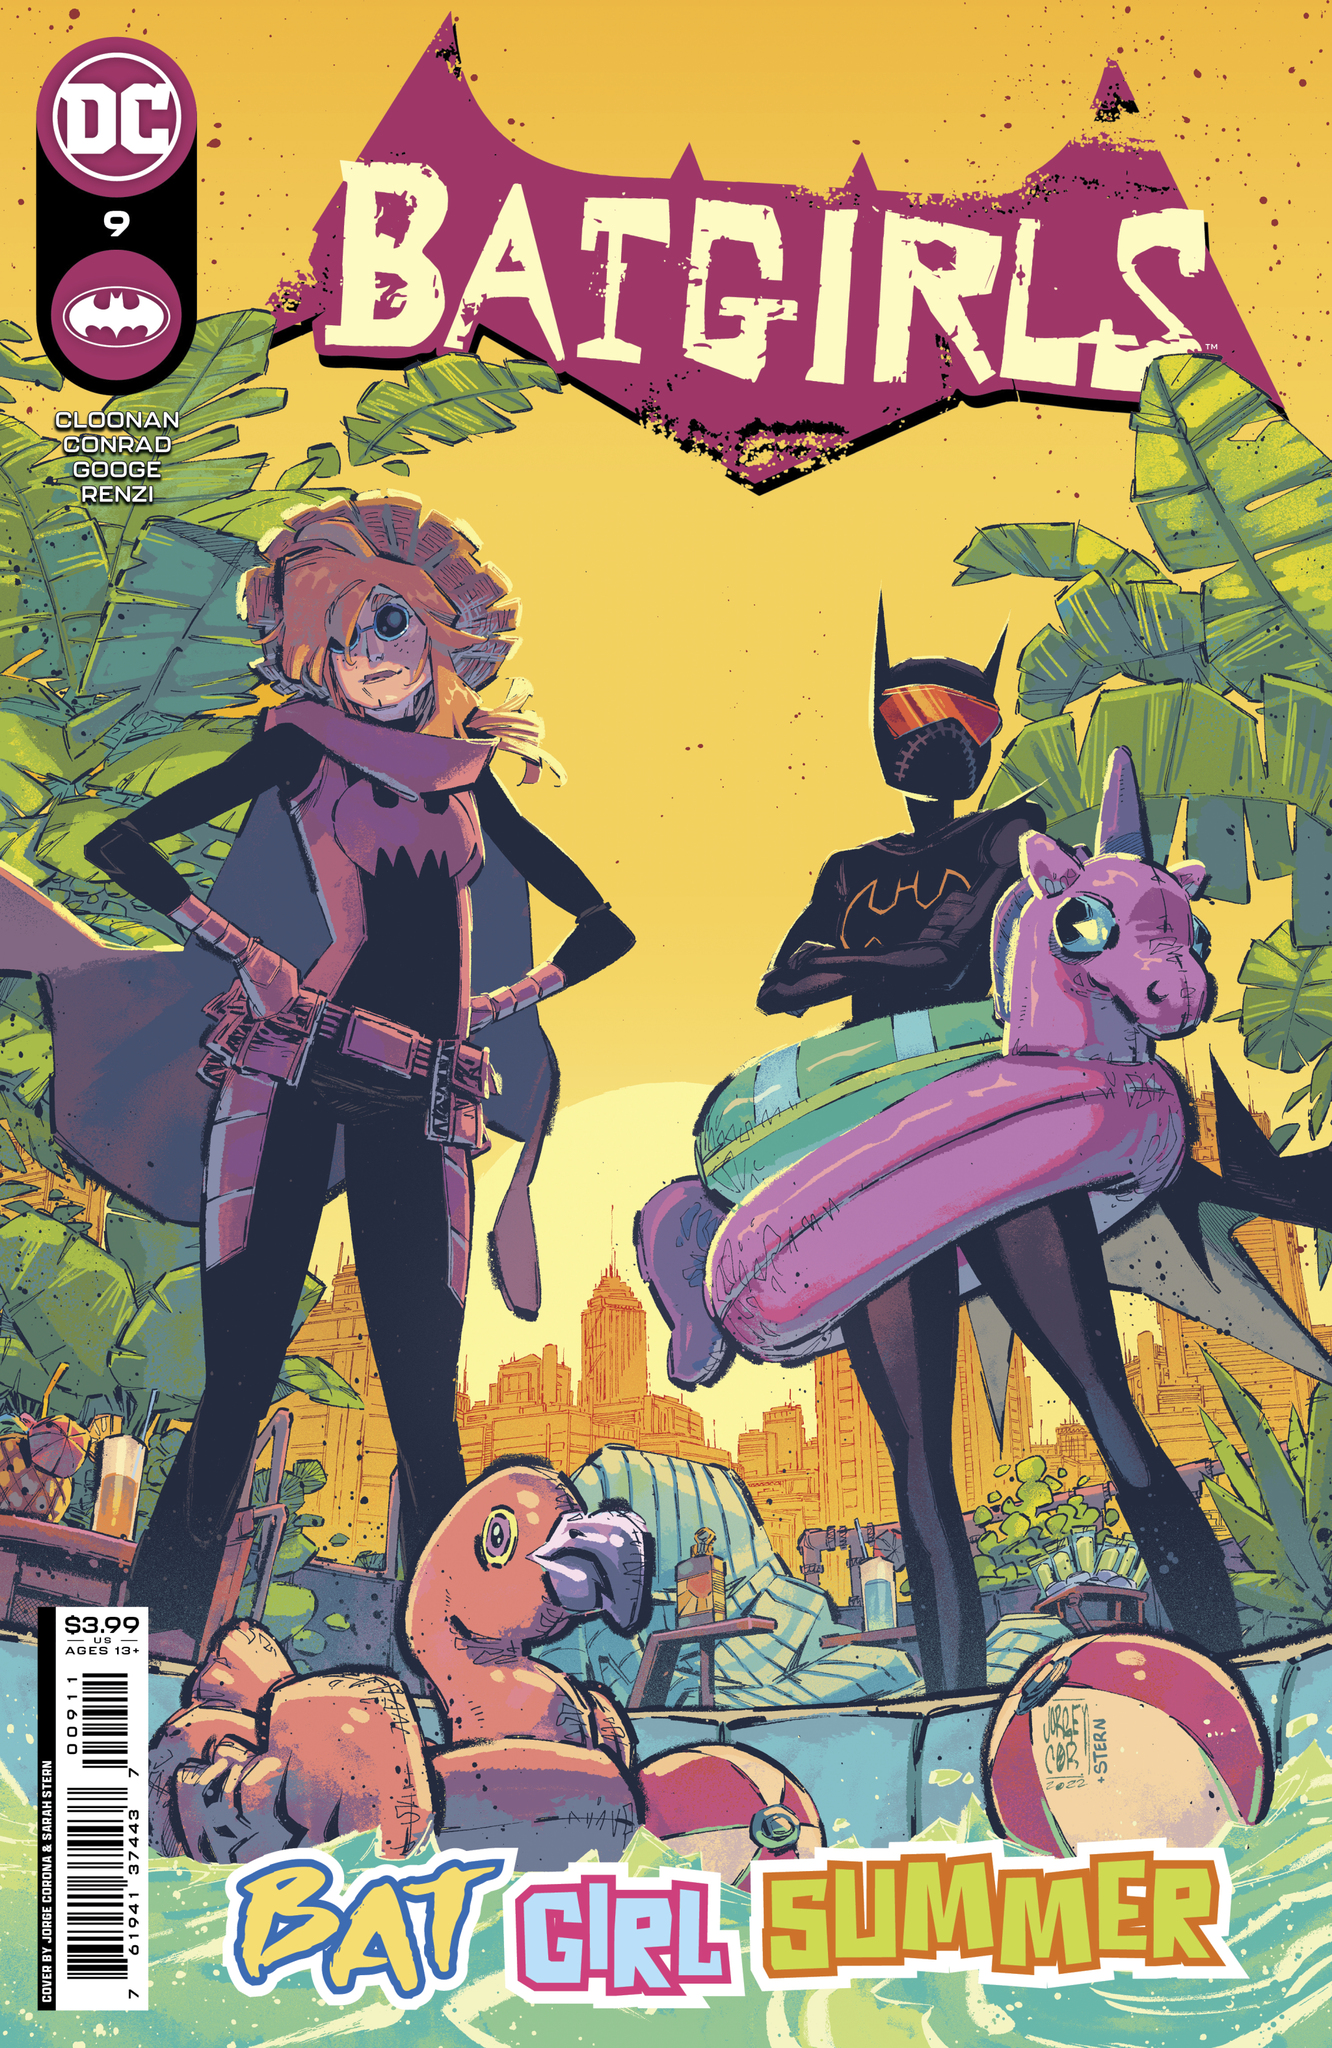 Batgirls #9 Cover A Jorge Corona